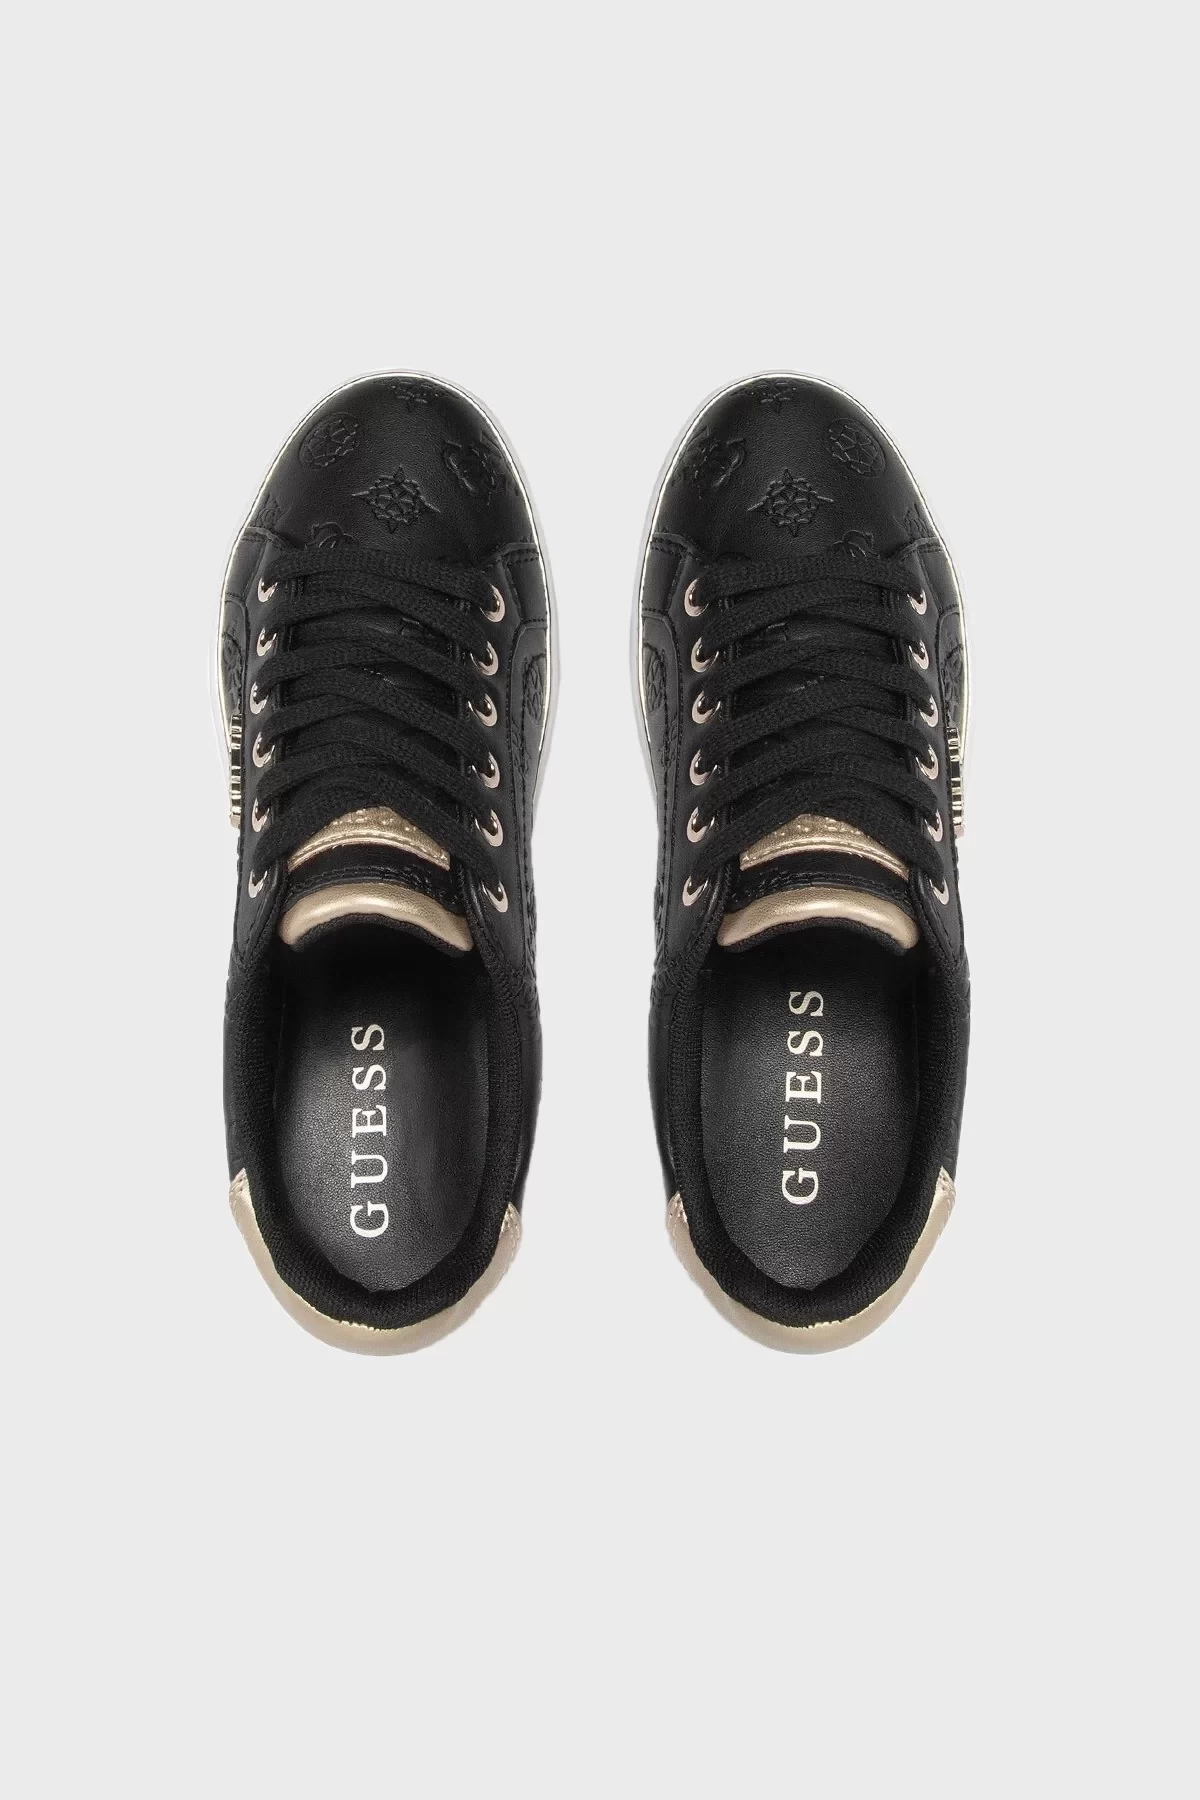 Guess Logolu Beckie  Kadın  Ayakkabı